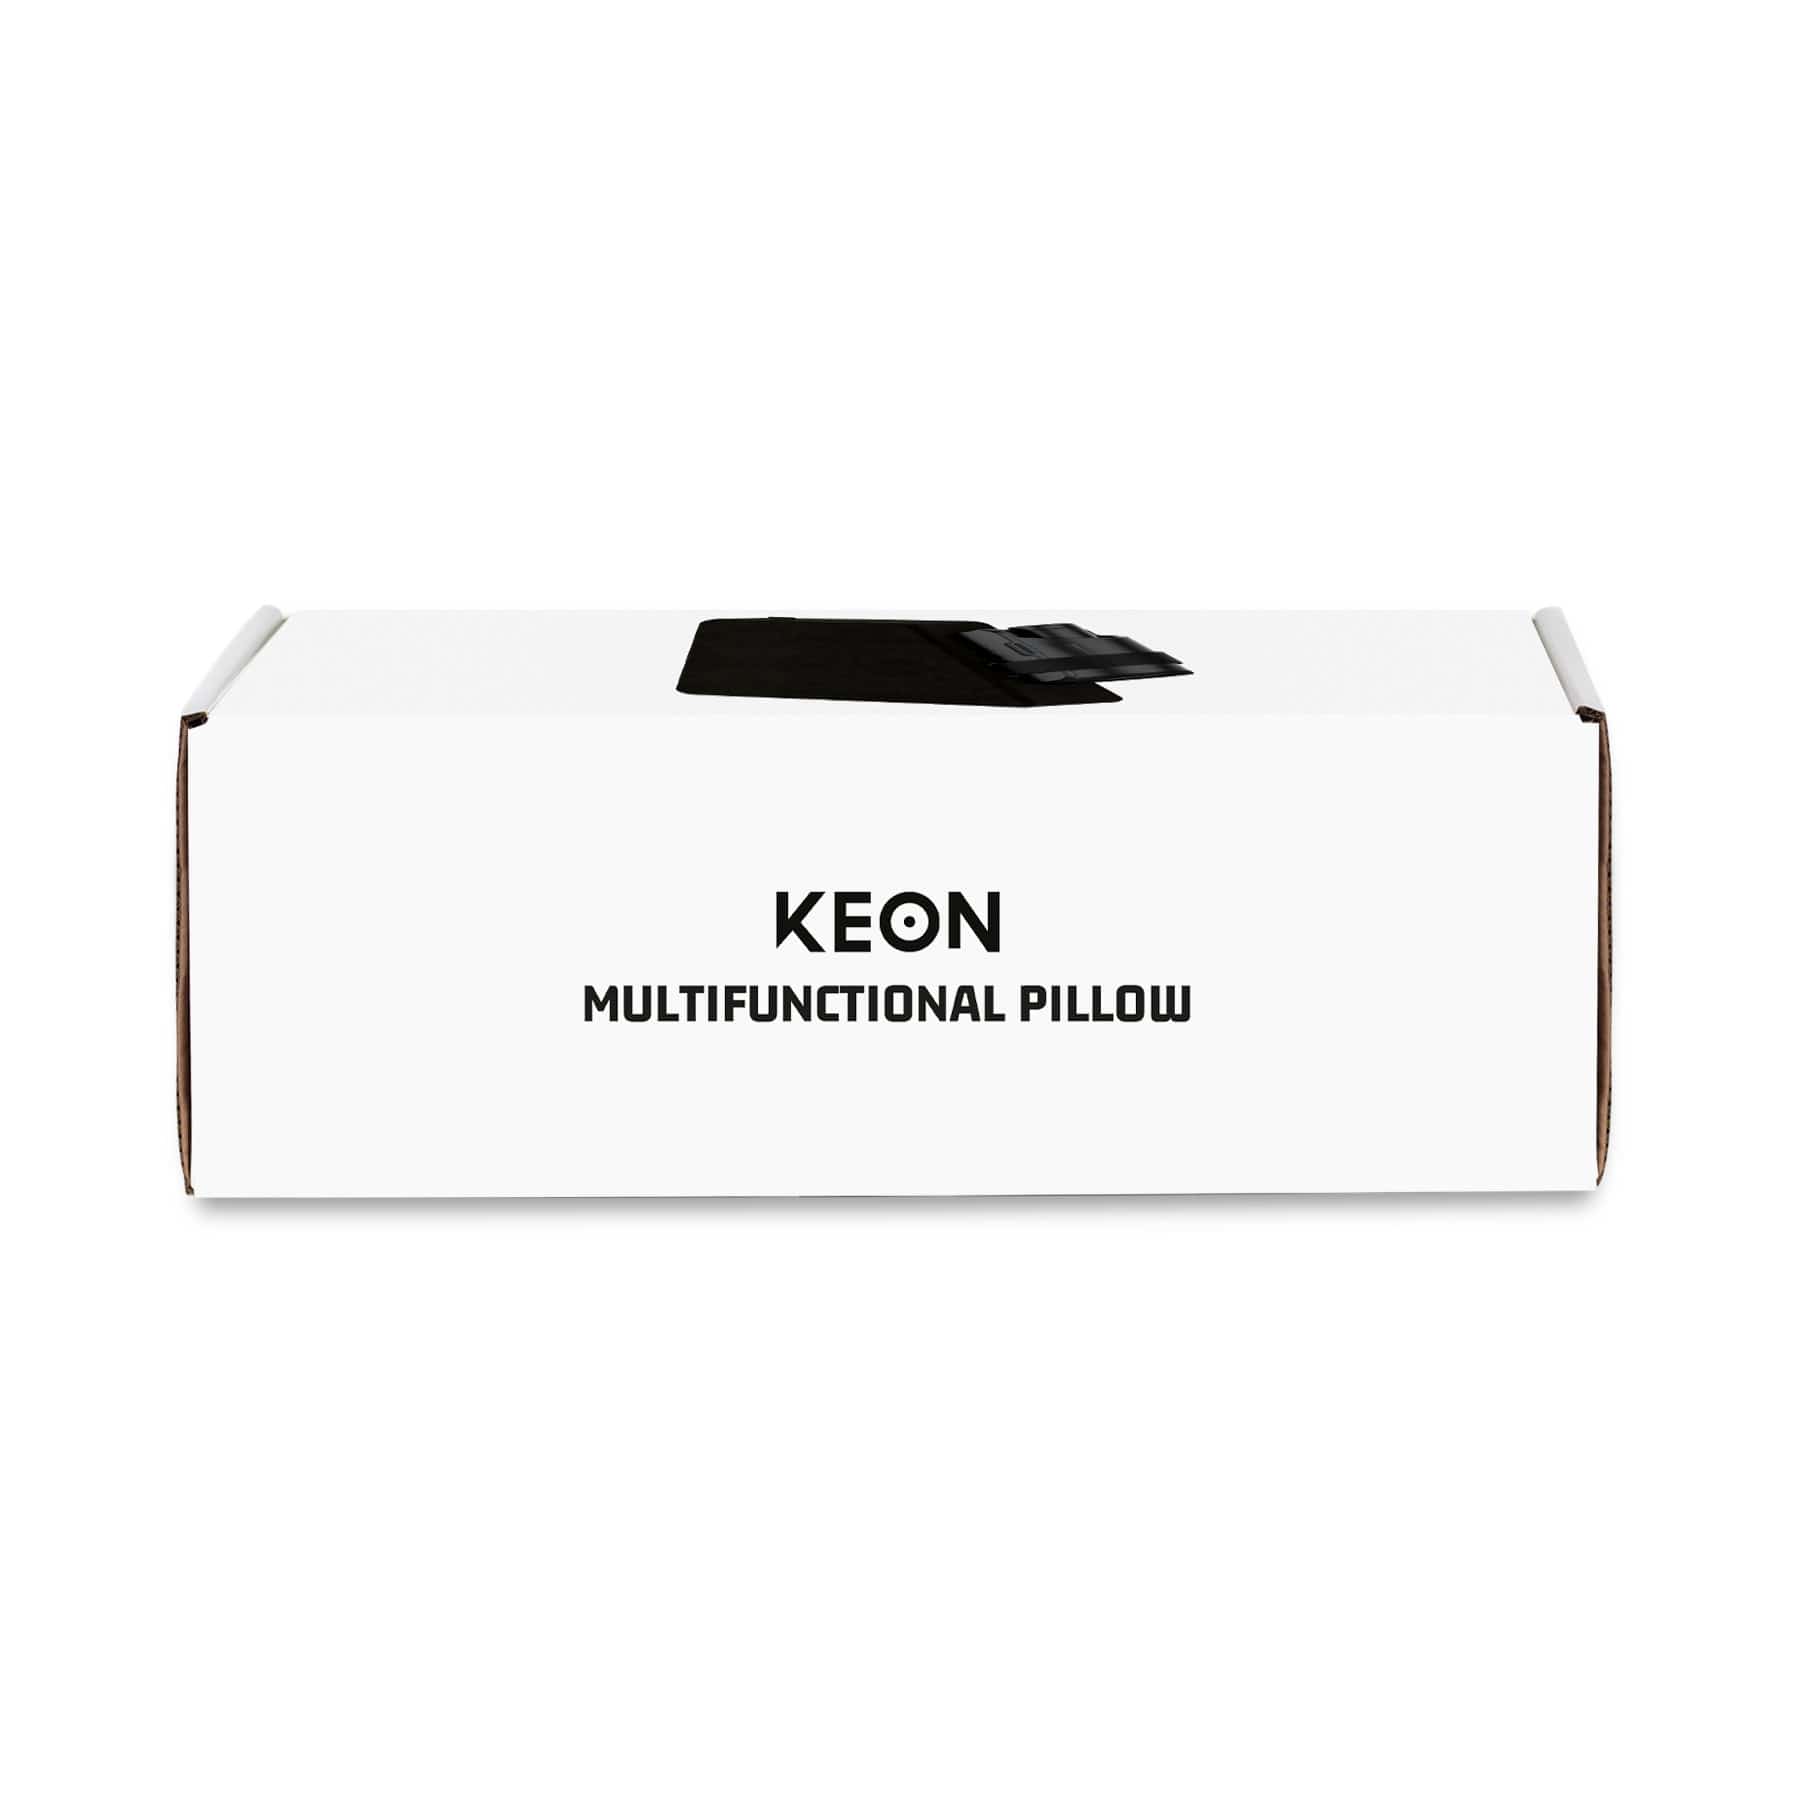 Kiiroo - Keon Masturbator Multifunctional Pillow and Strap Accessories -  Accessories  Durio.sg